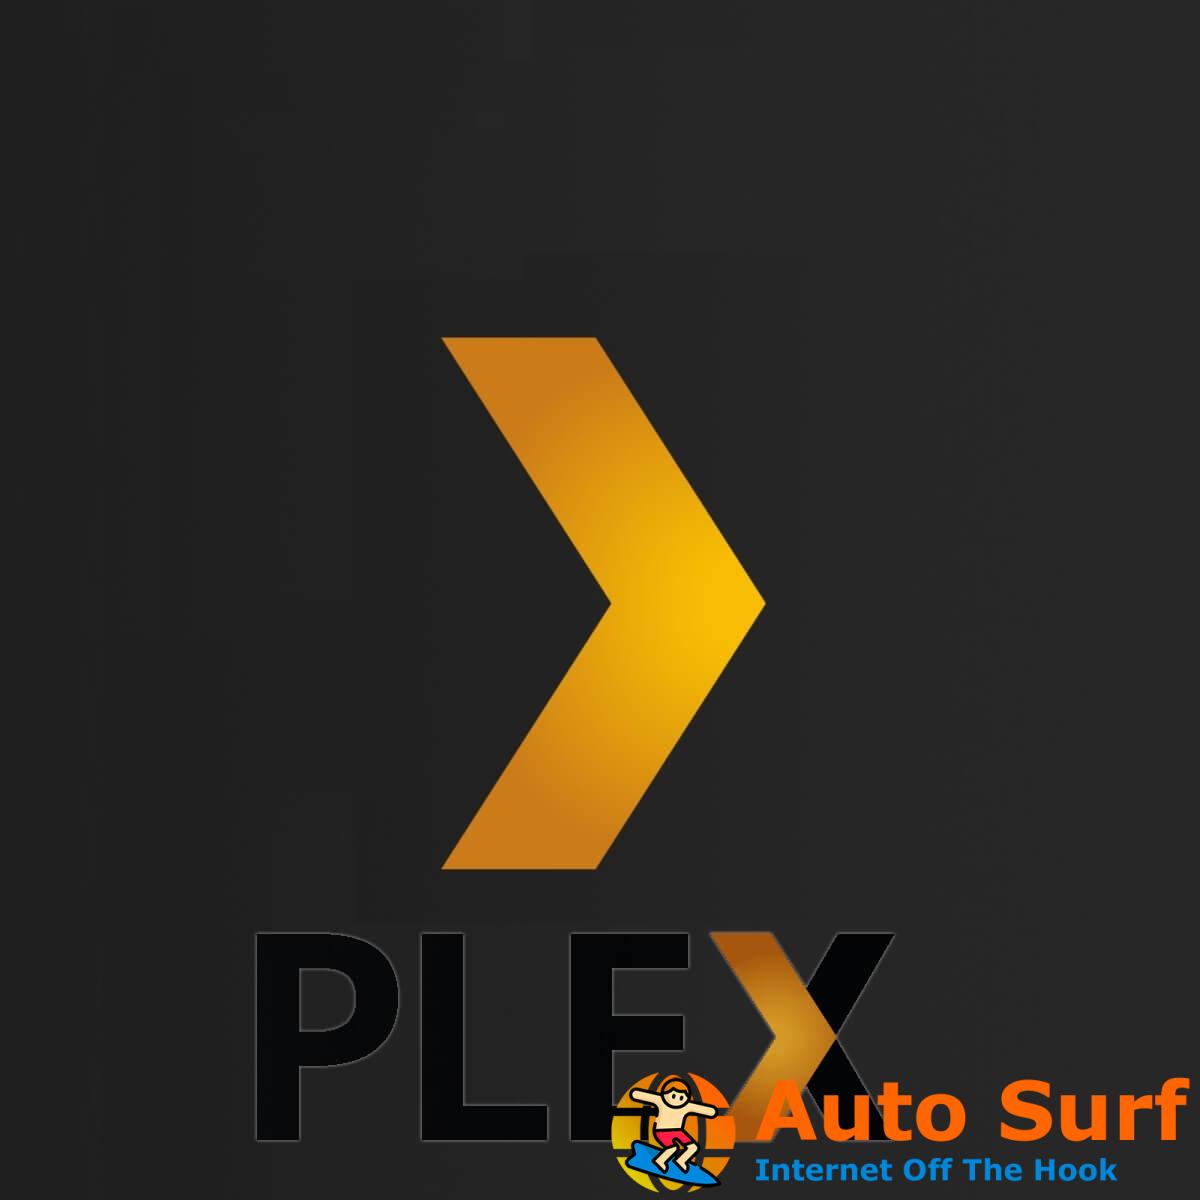 Plex Media Server no se instala